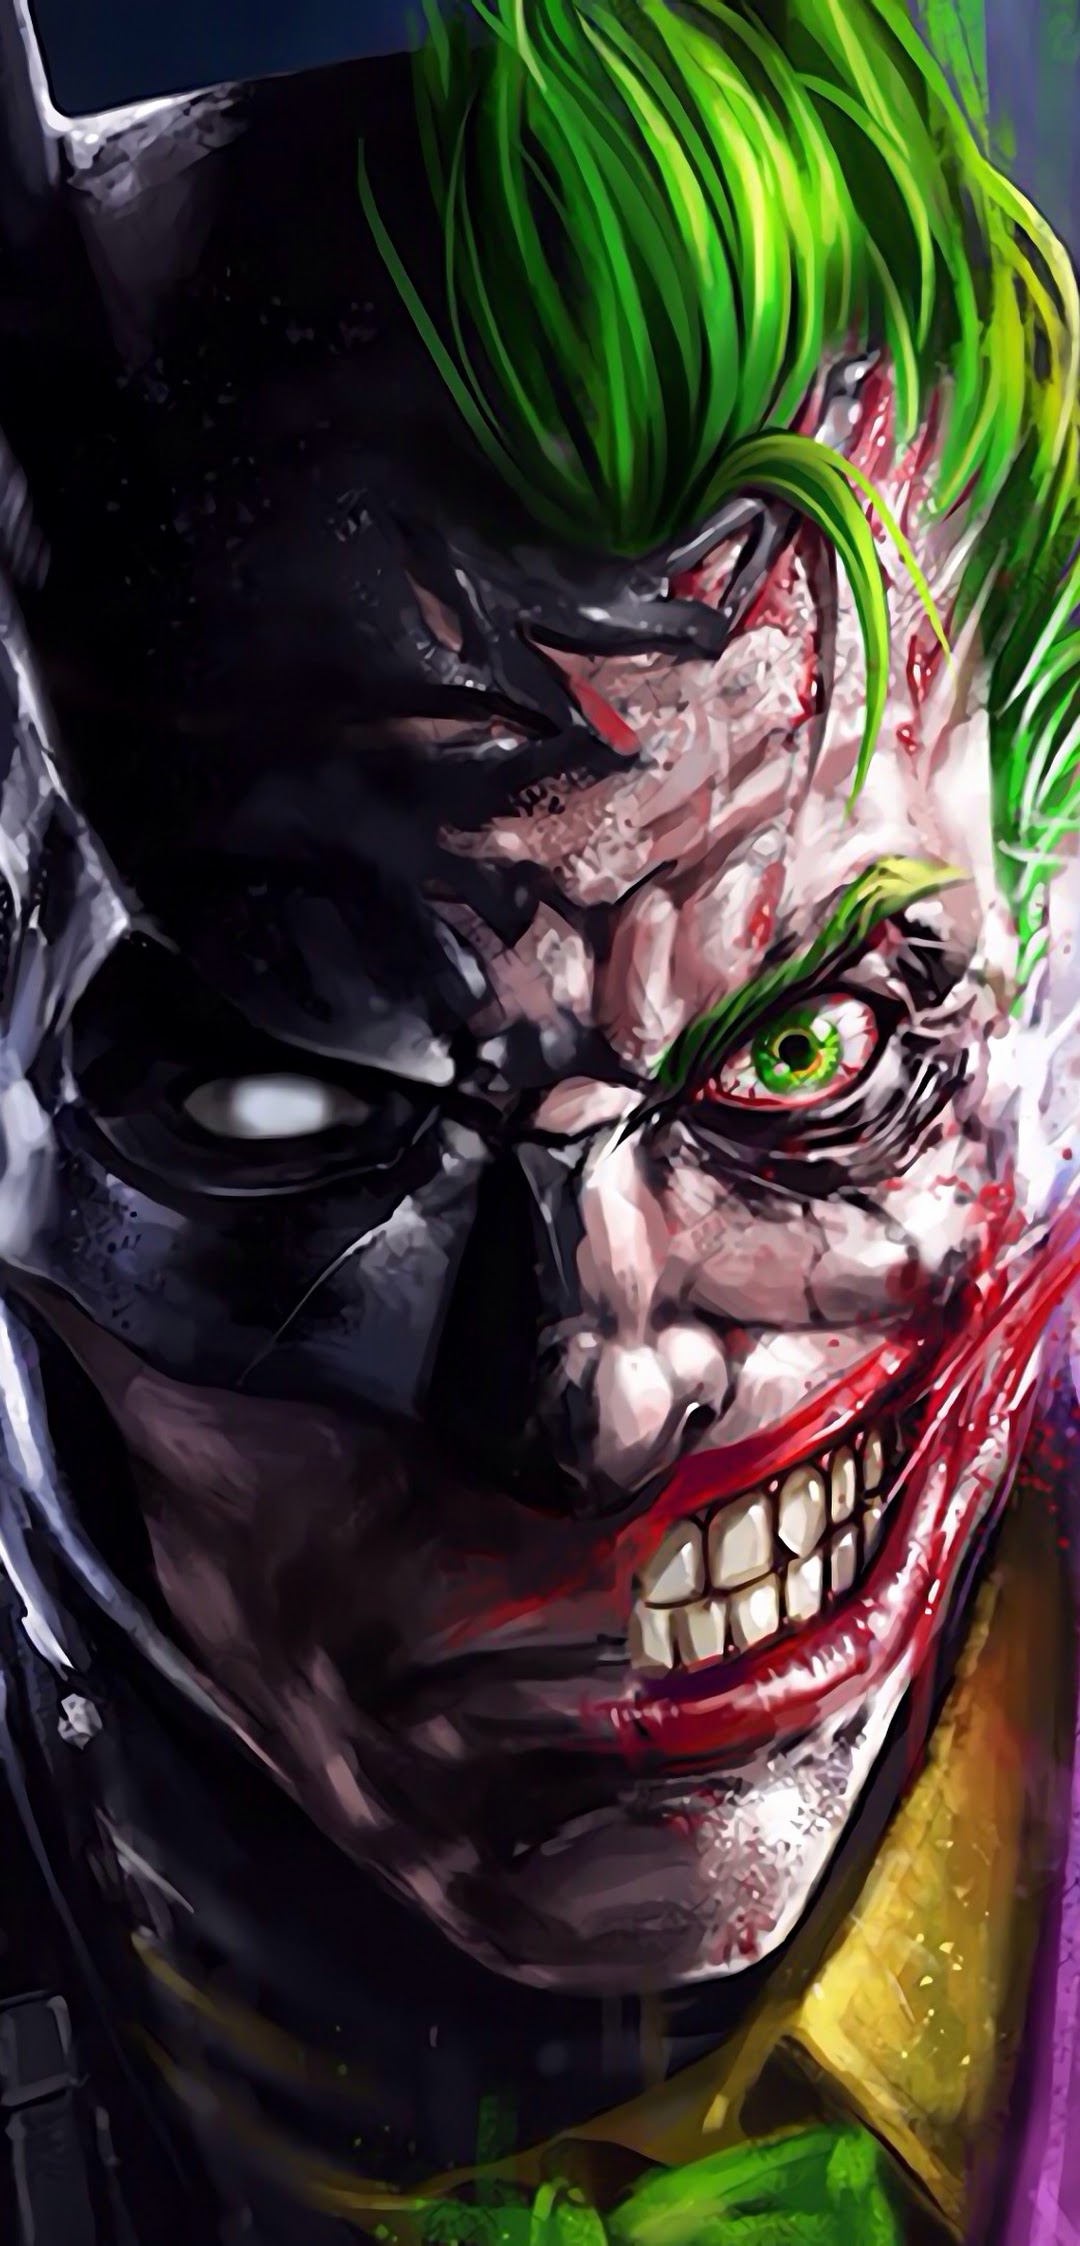 Batman, Joker, 4k, - Batman Vs Joker Poster - HD Wallpaper 